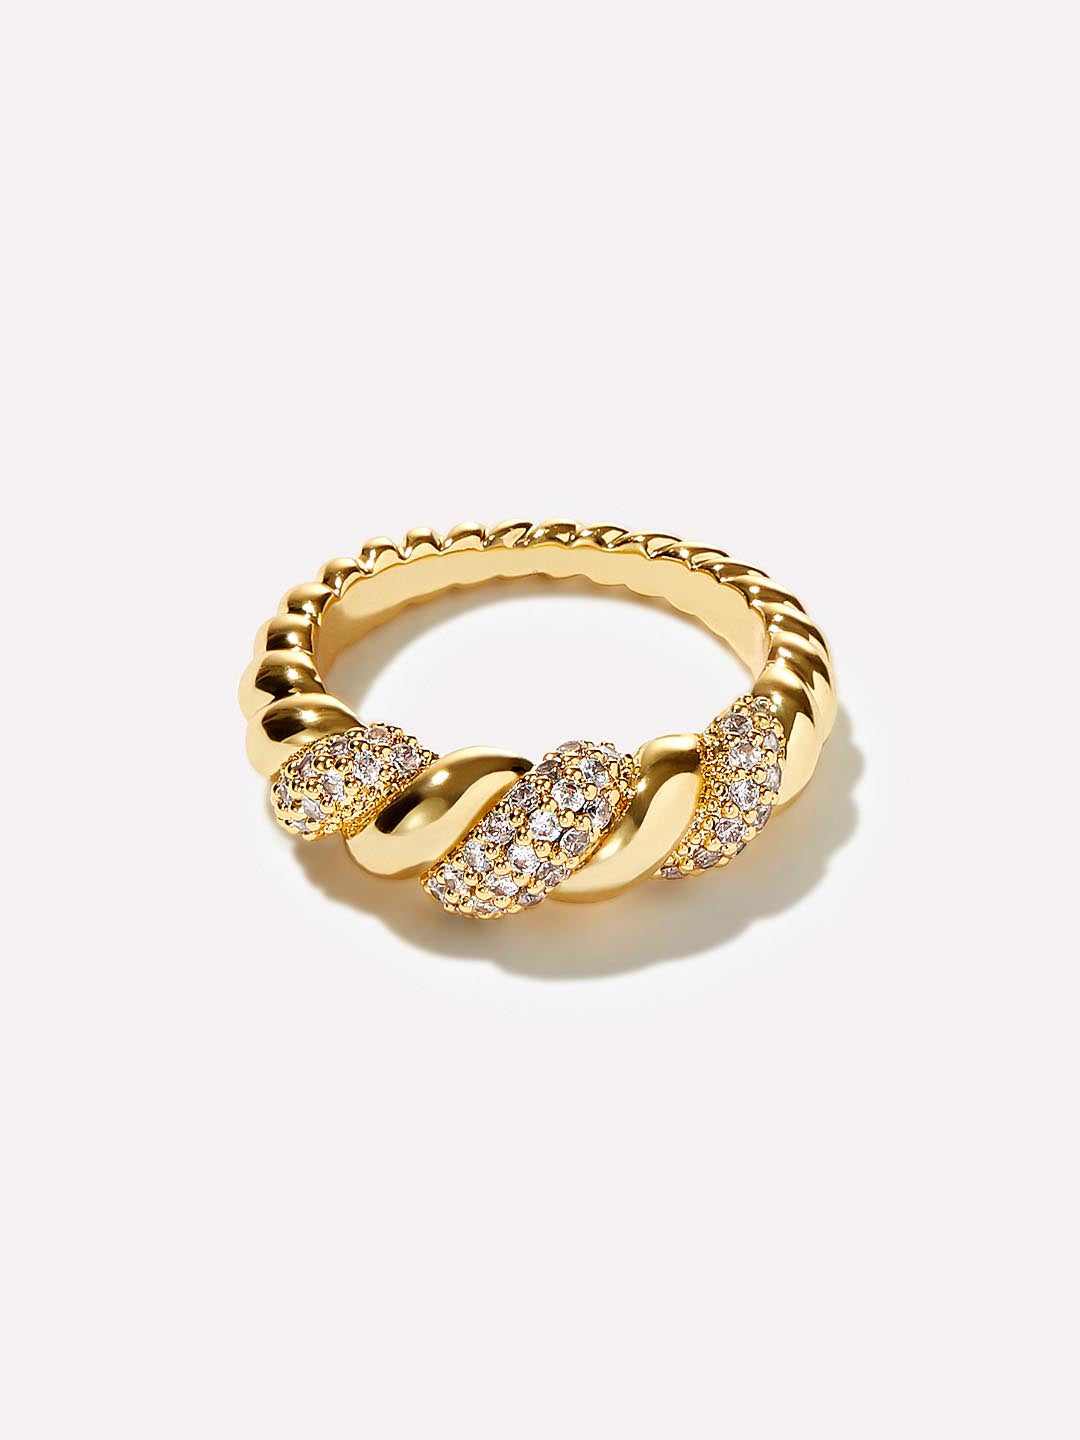 Genuine Pandora 14ct Gold Lace Botanique Statement Ring, 150182CZ, Size 52.  | eBay